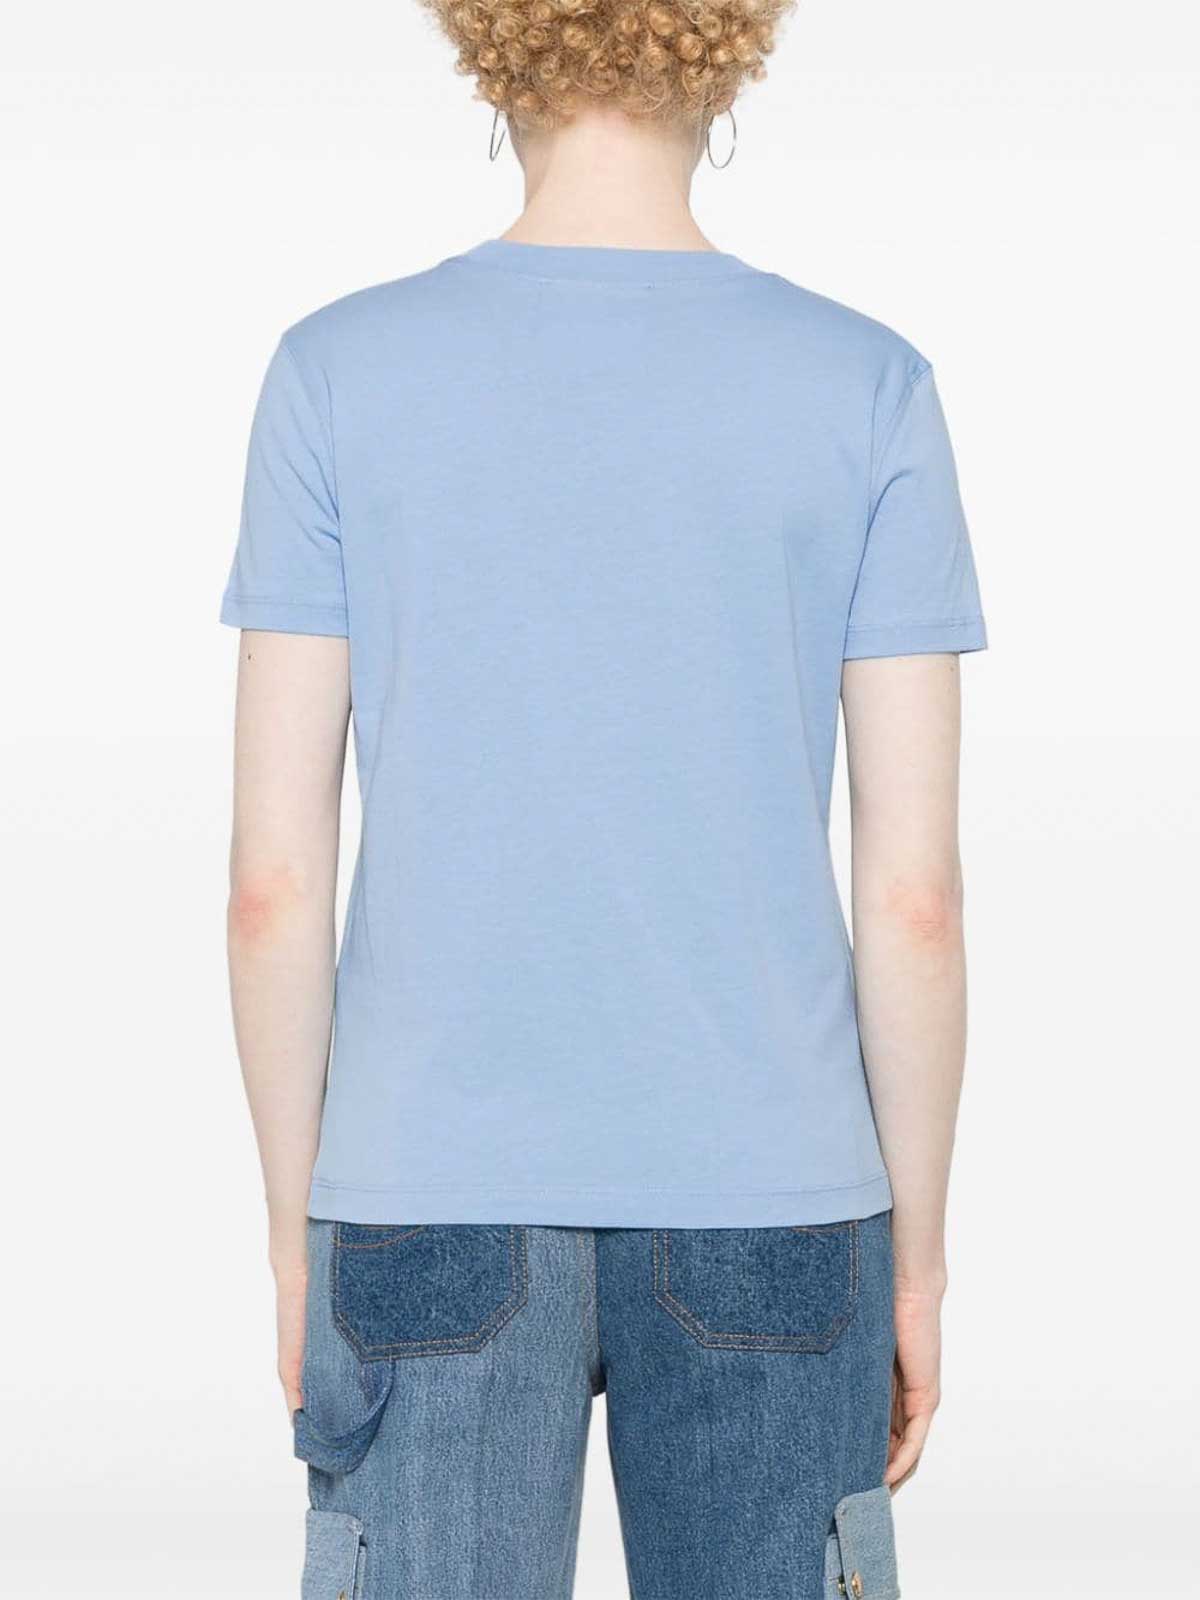 Shop Versace Jeans Couture Camiseta - Azul Claro In Light Blue